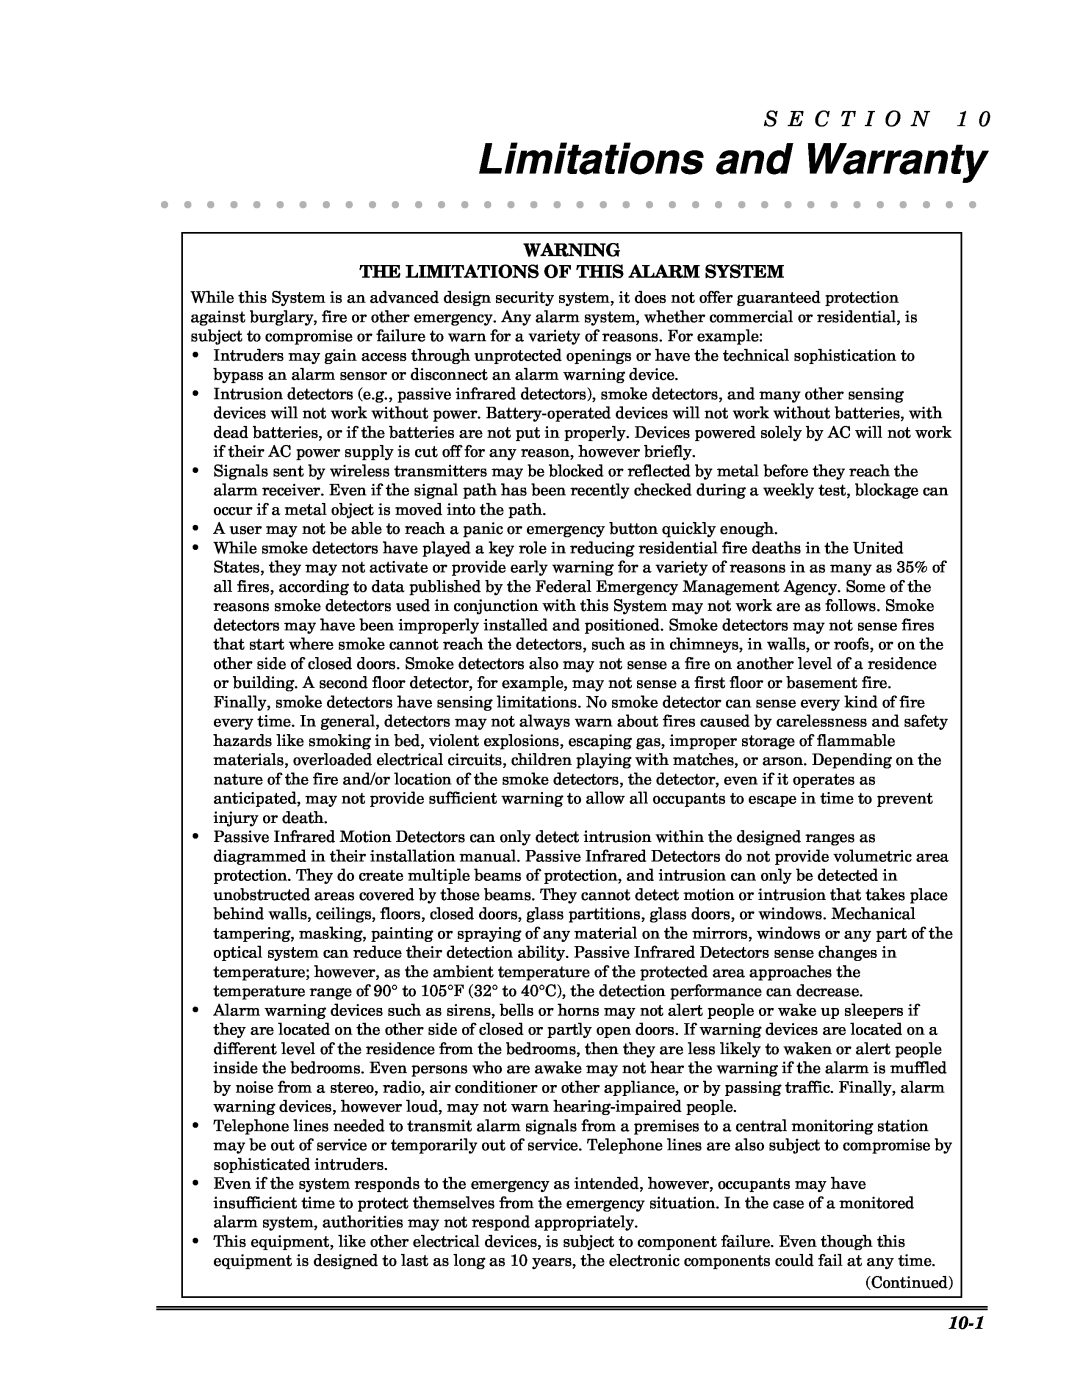 Honeywell VISTA-10PSIA, Ademco Security Systems setup guide Limitations and Warranty, S E C T I O N, 10-1 